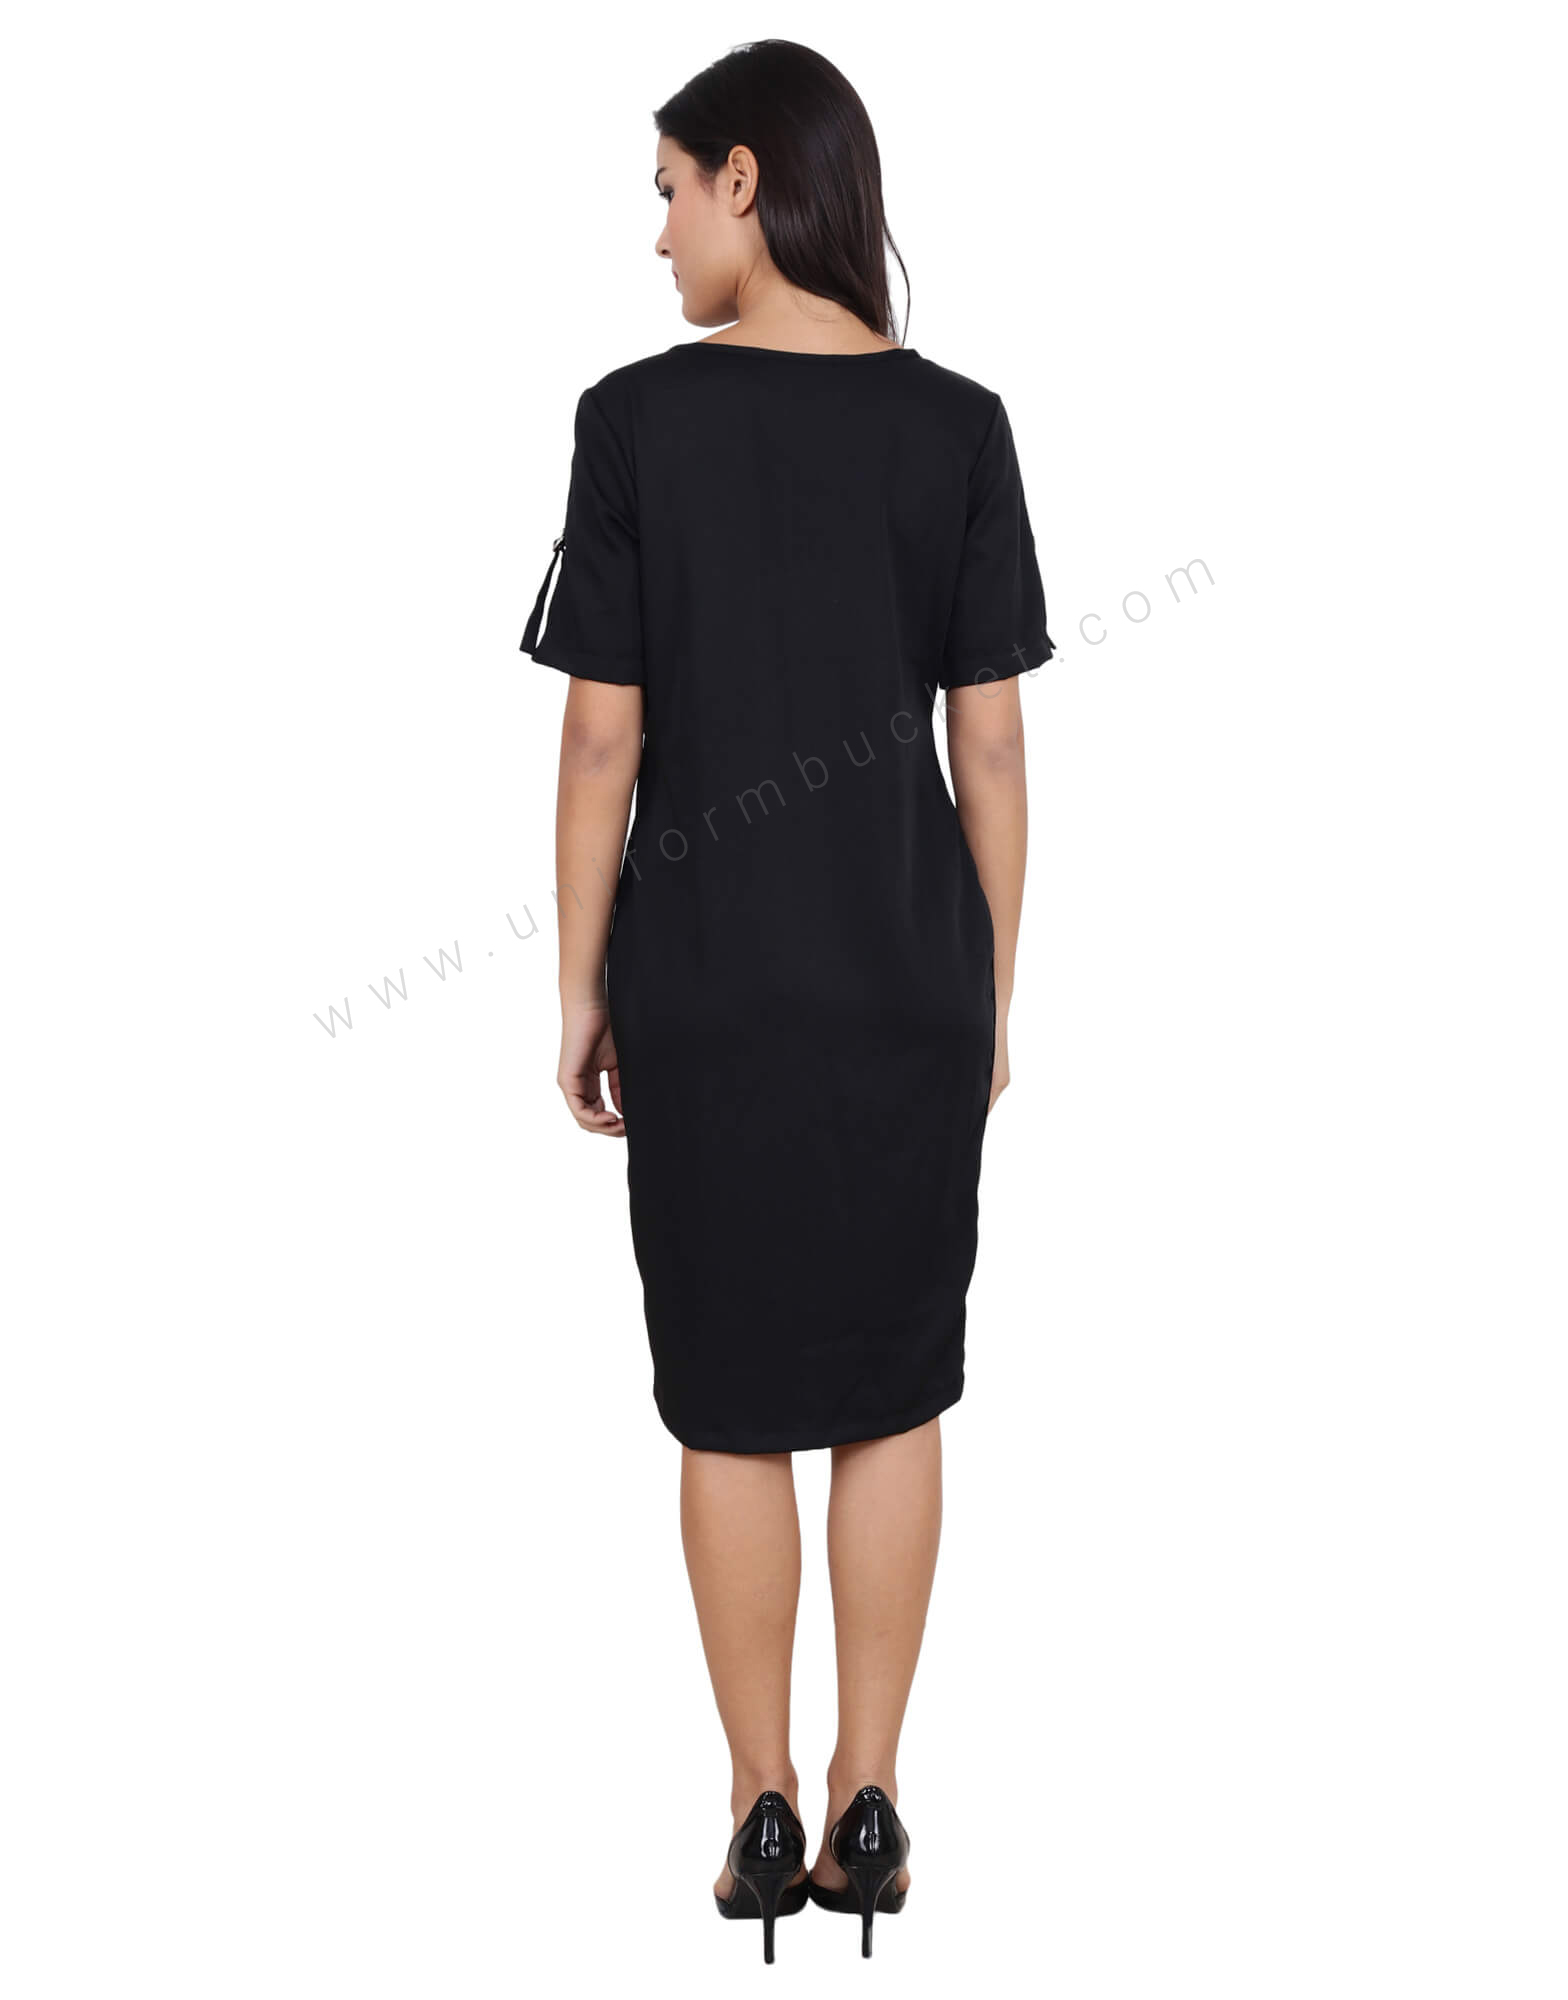 Get Black Cotton Stretch Sheath Dress at ₹ 1500 | LBB Shop